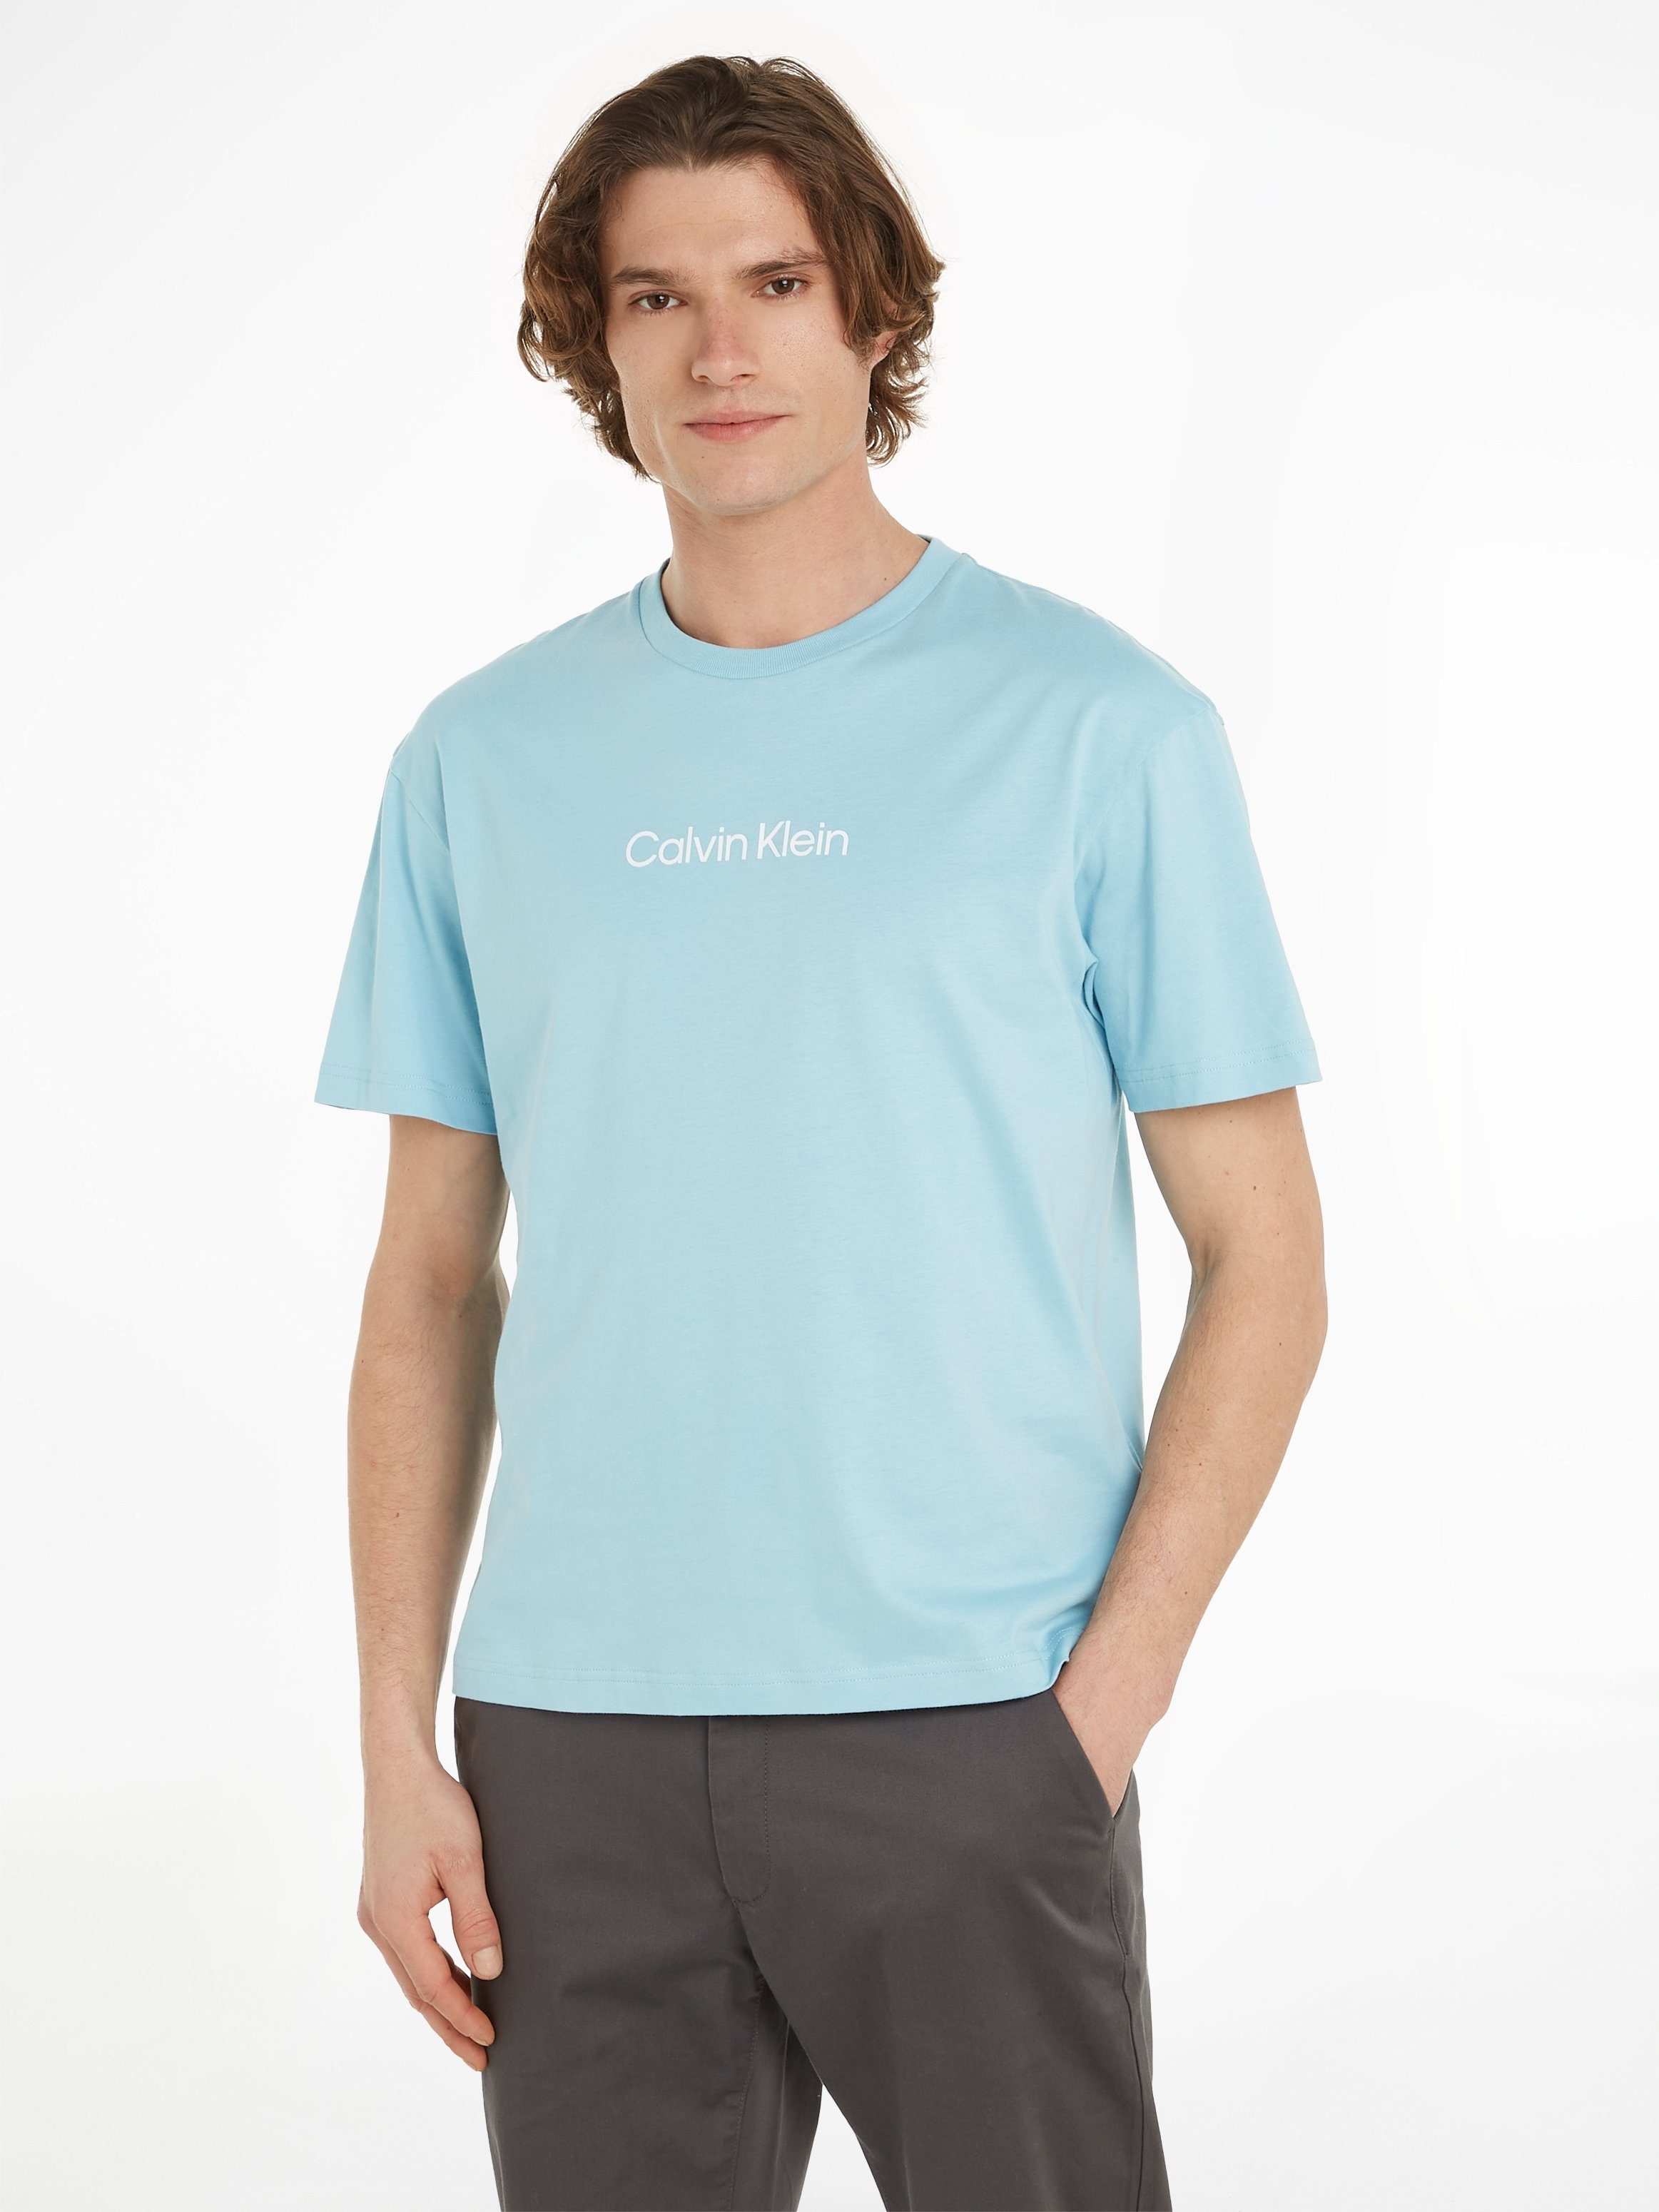 Calvin Klein T-Shirt HERO LOGO COMFORT T-SHIRT mit aufgedrucktem Markenlabel Tropic Blue | T-Shirts